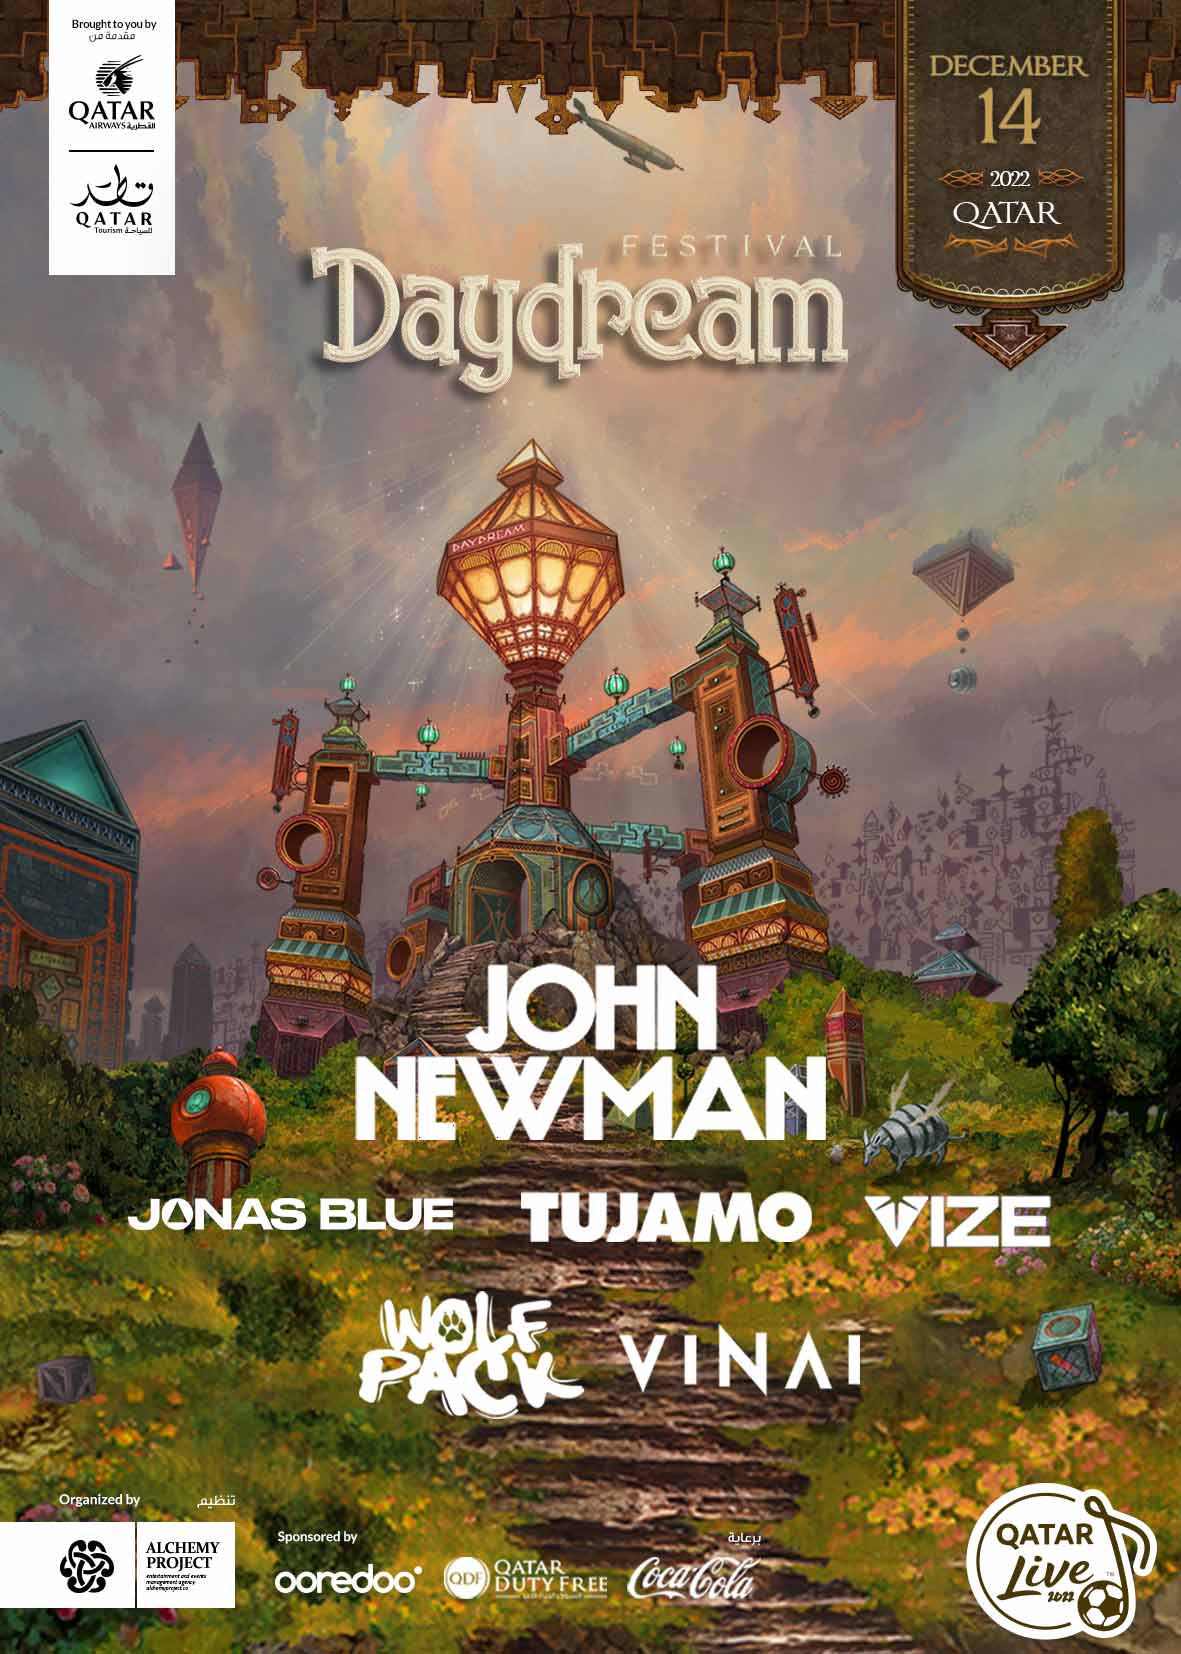 Daydream Music Festival 14th December